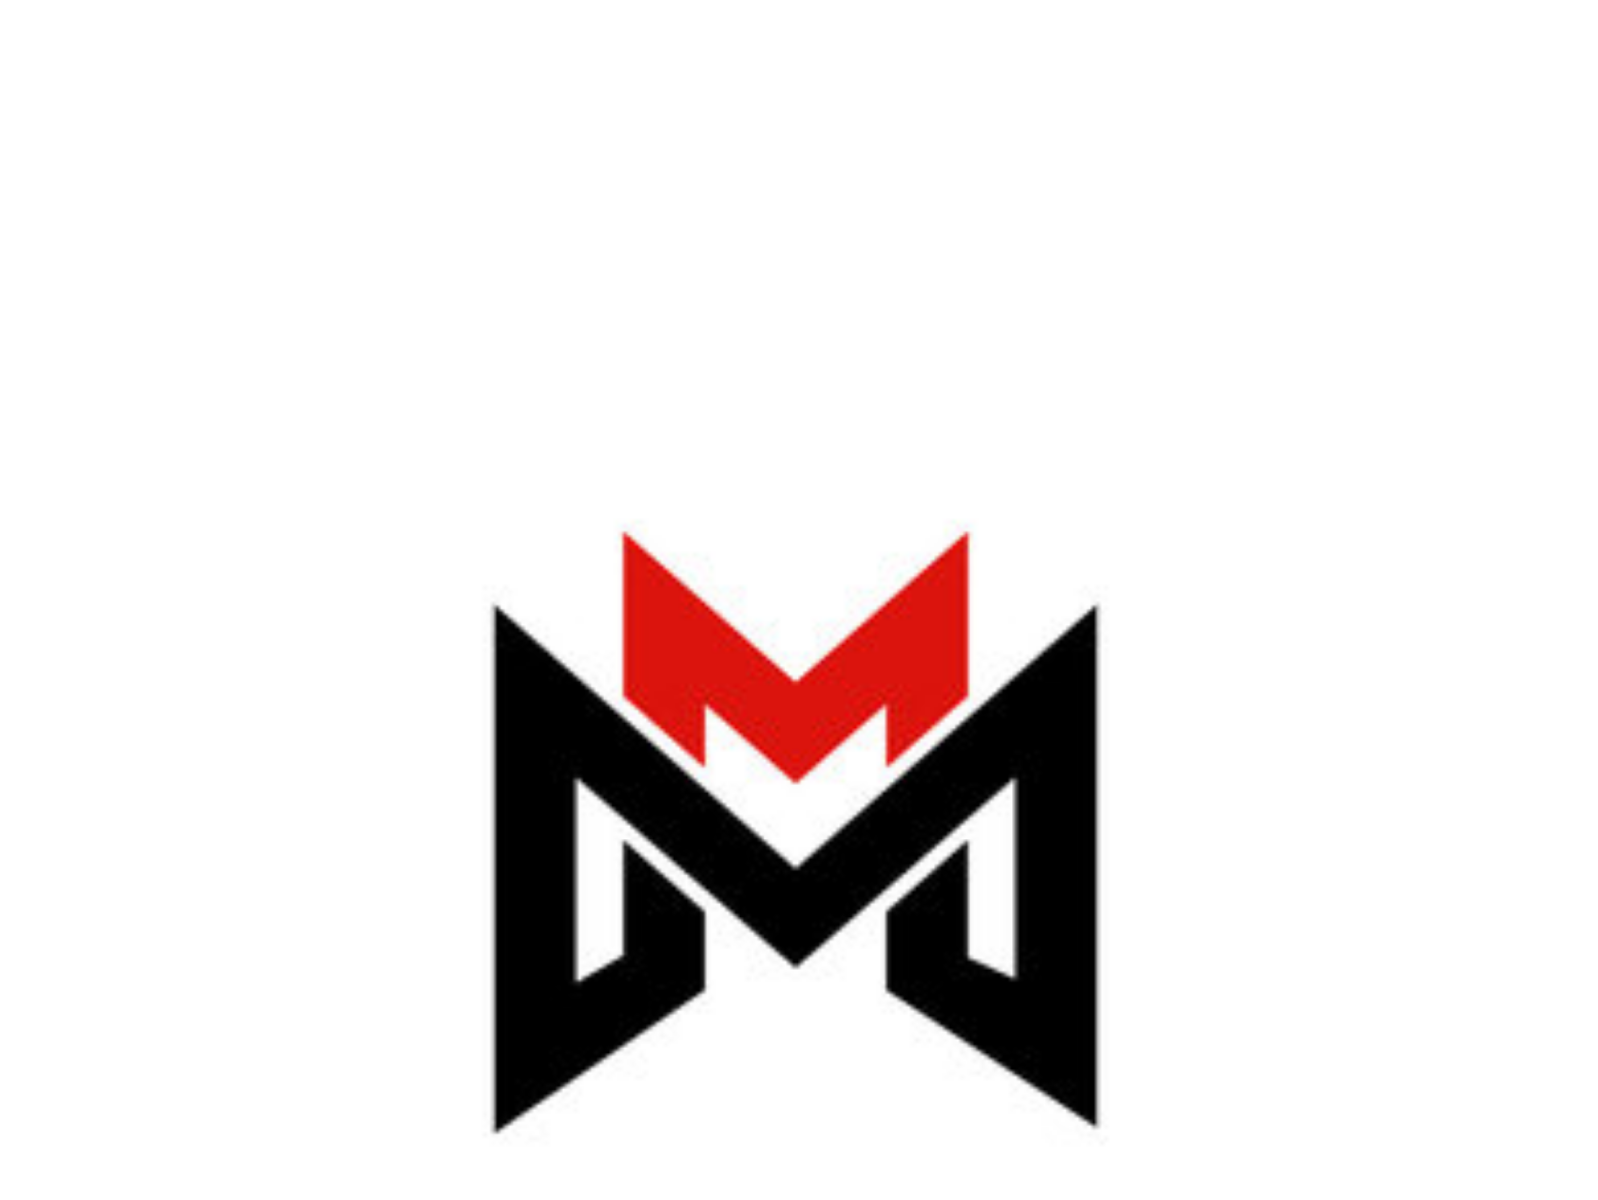 mmm logo design